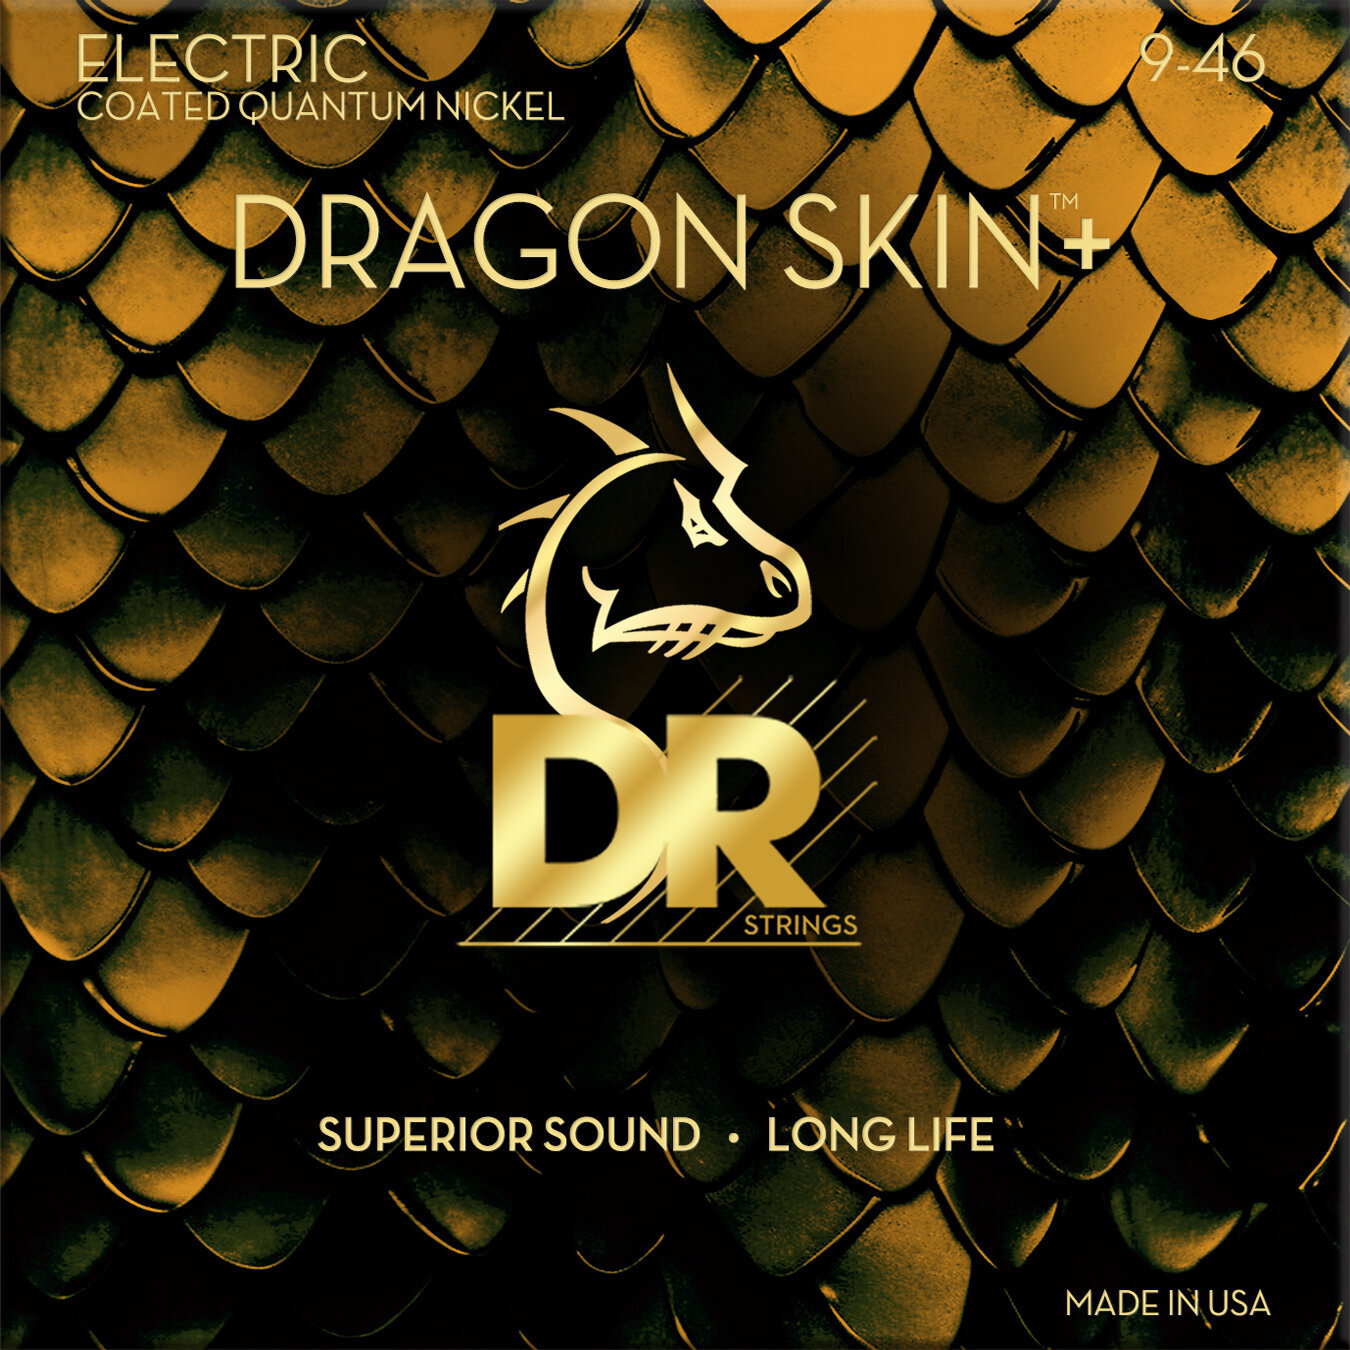 Cordas para guitarra elétrica Mi DR Strings Dragon Skin+ Coated Light to Medium 9-46